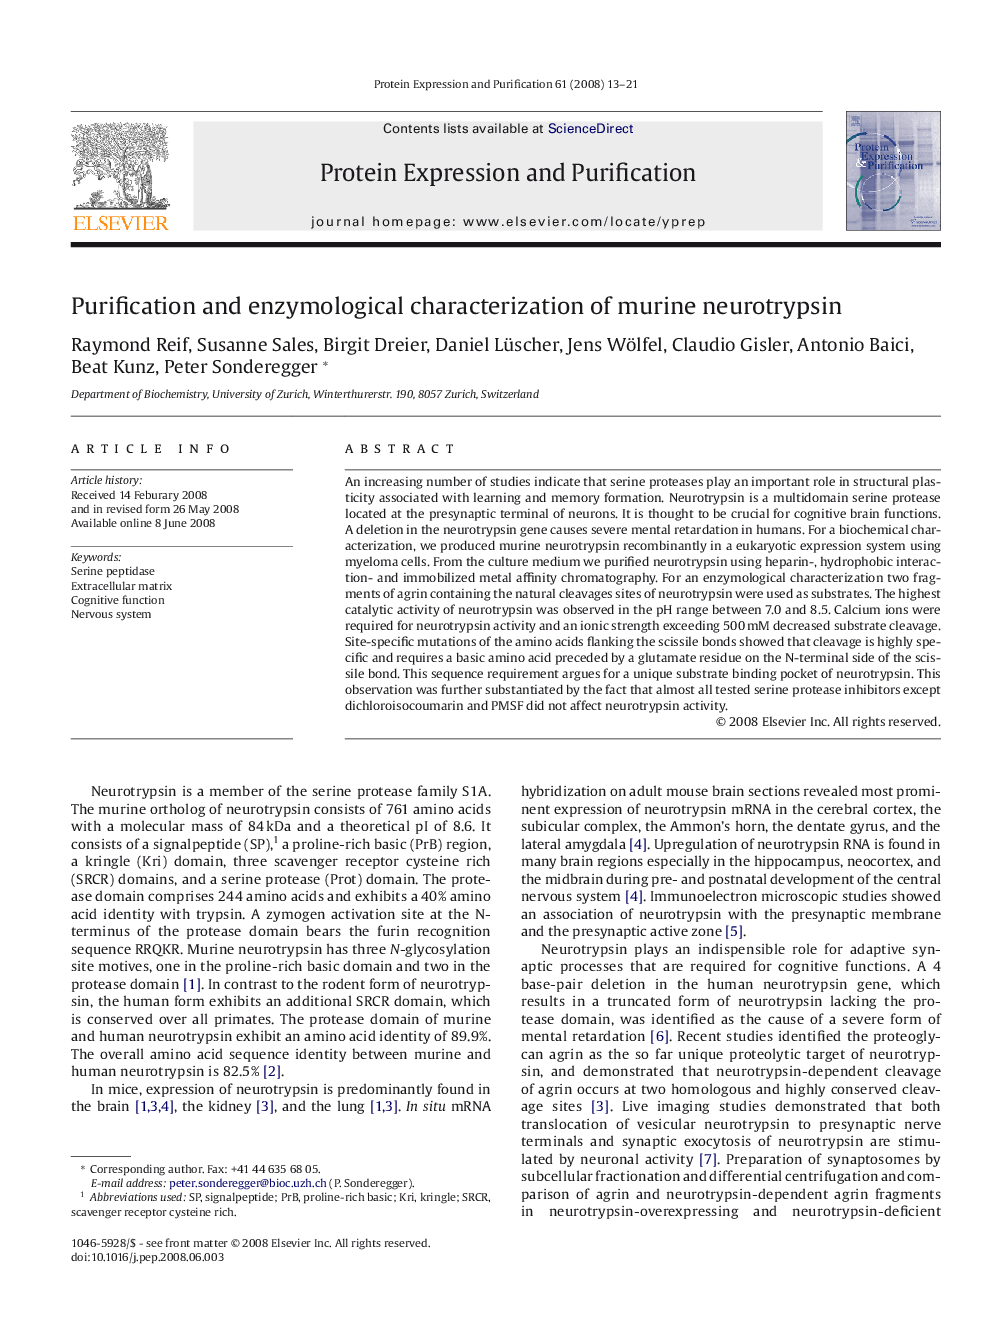 Purification and enzymological characterization of murine neurotrypsin